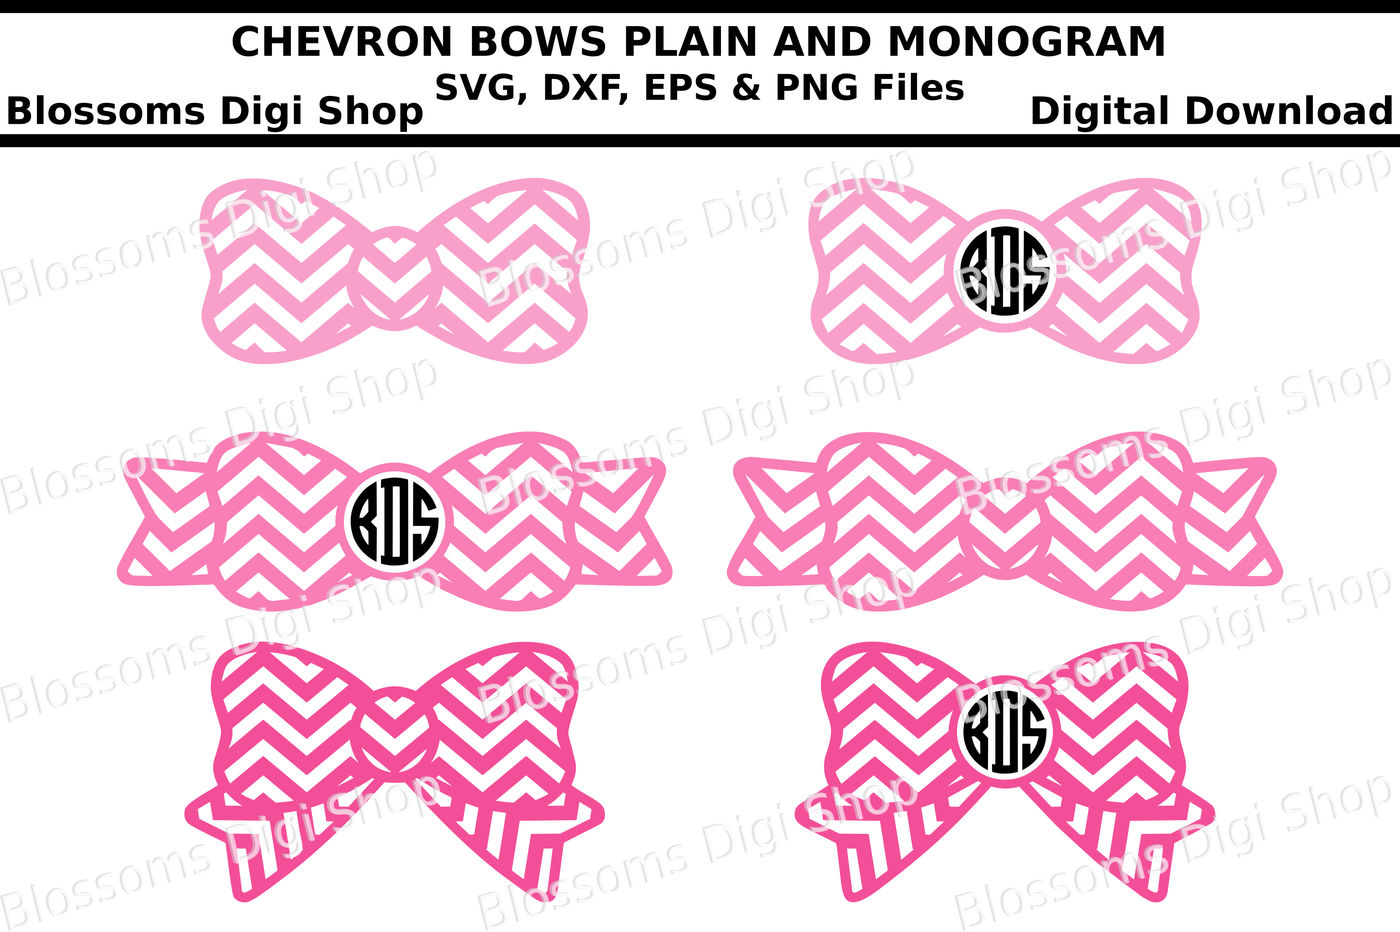 Chevron Bow Monogram Svg Eps Dxf And Png Cut Files By Blossoms Digi Shop Thehungryjpeg Com